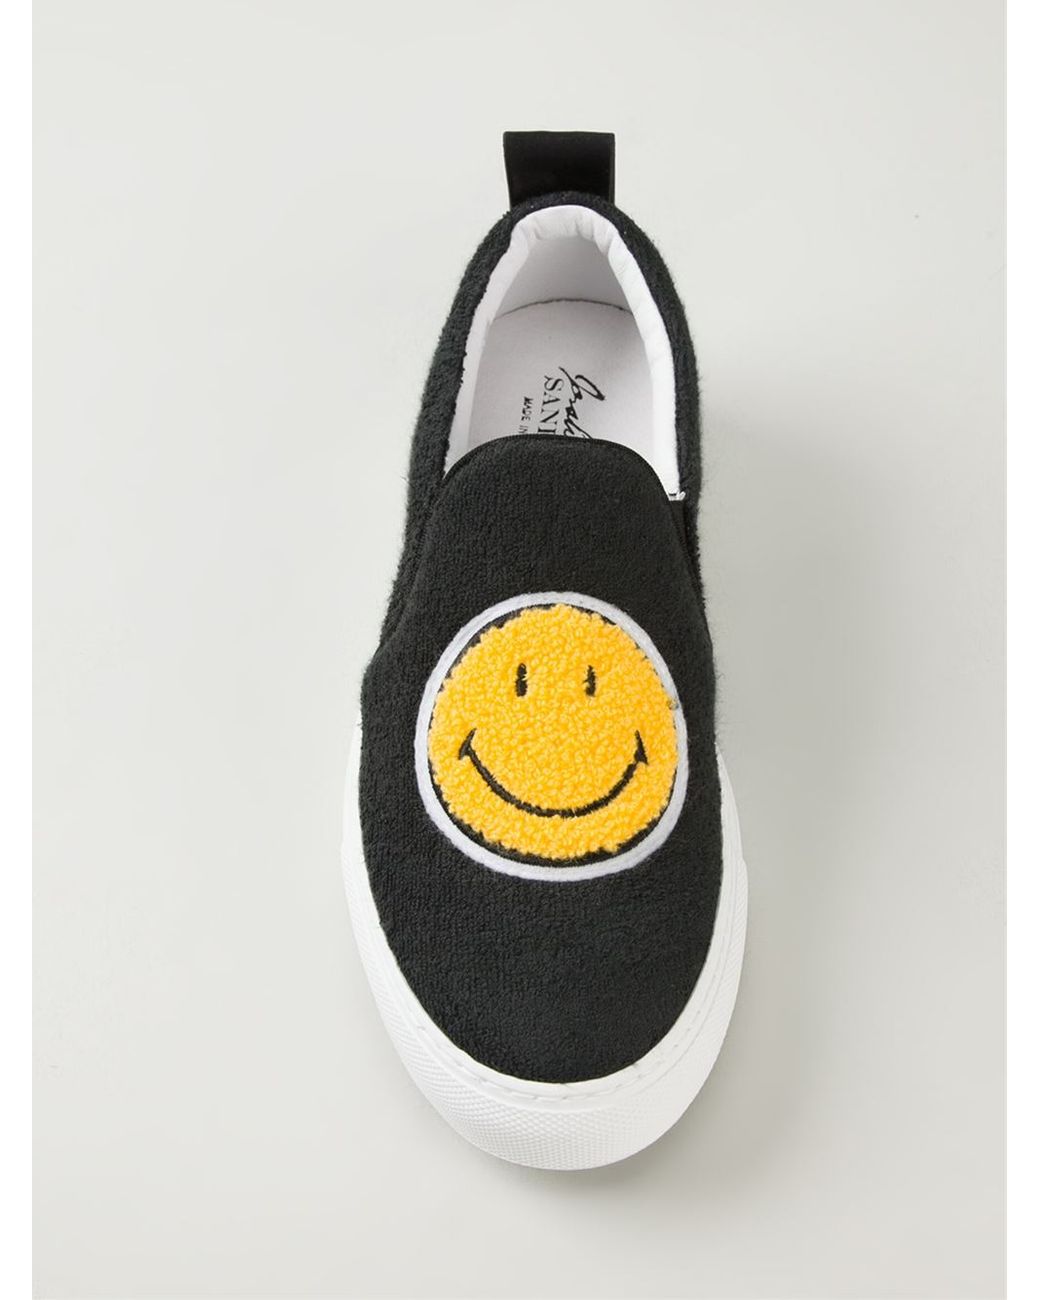 Joshua Sanders Smiley Face Slip-on Sneakers in Yellow | Lyst